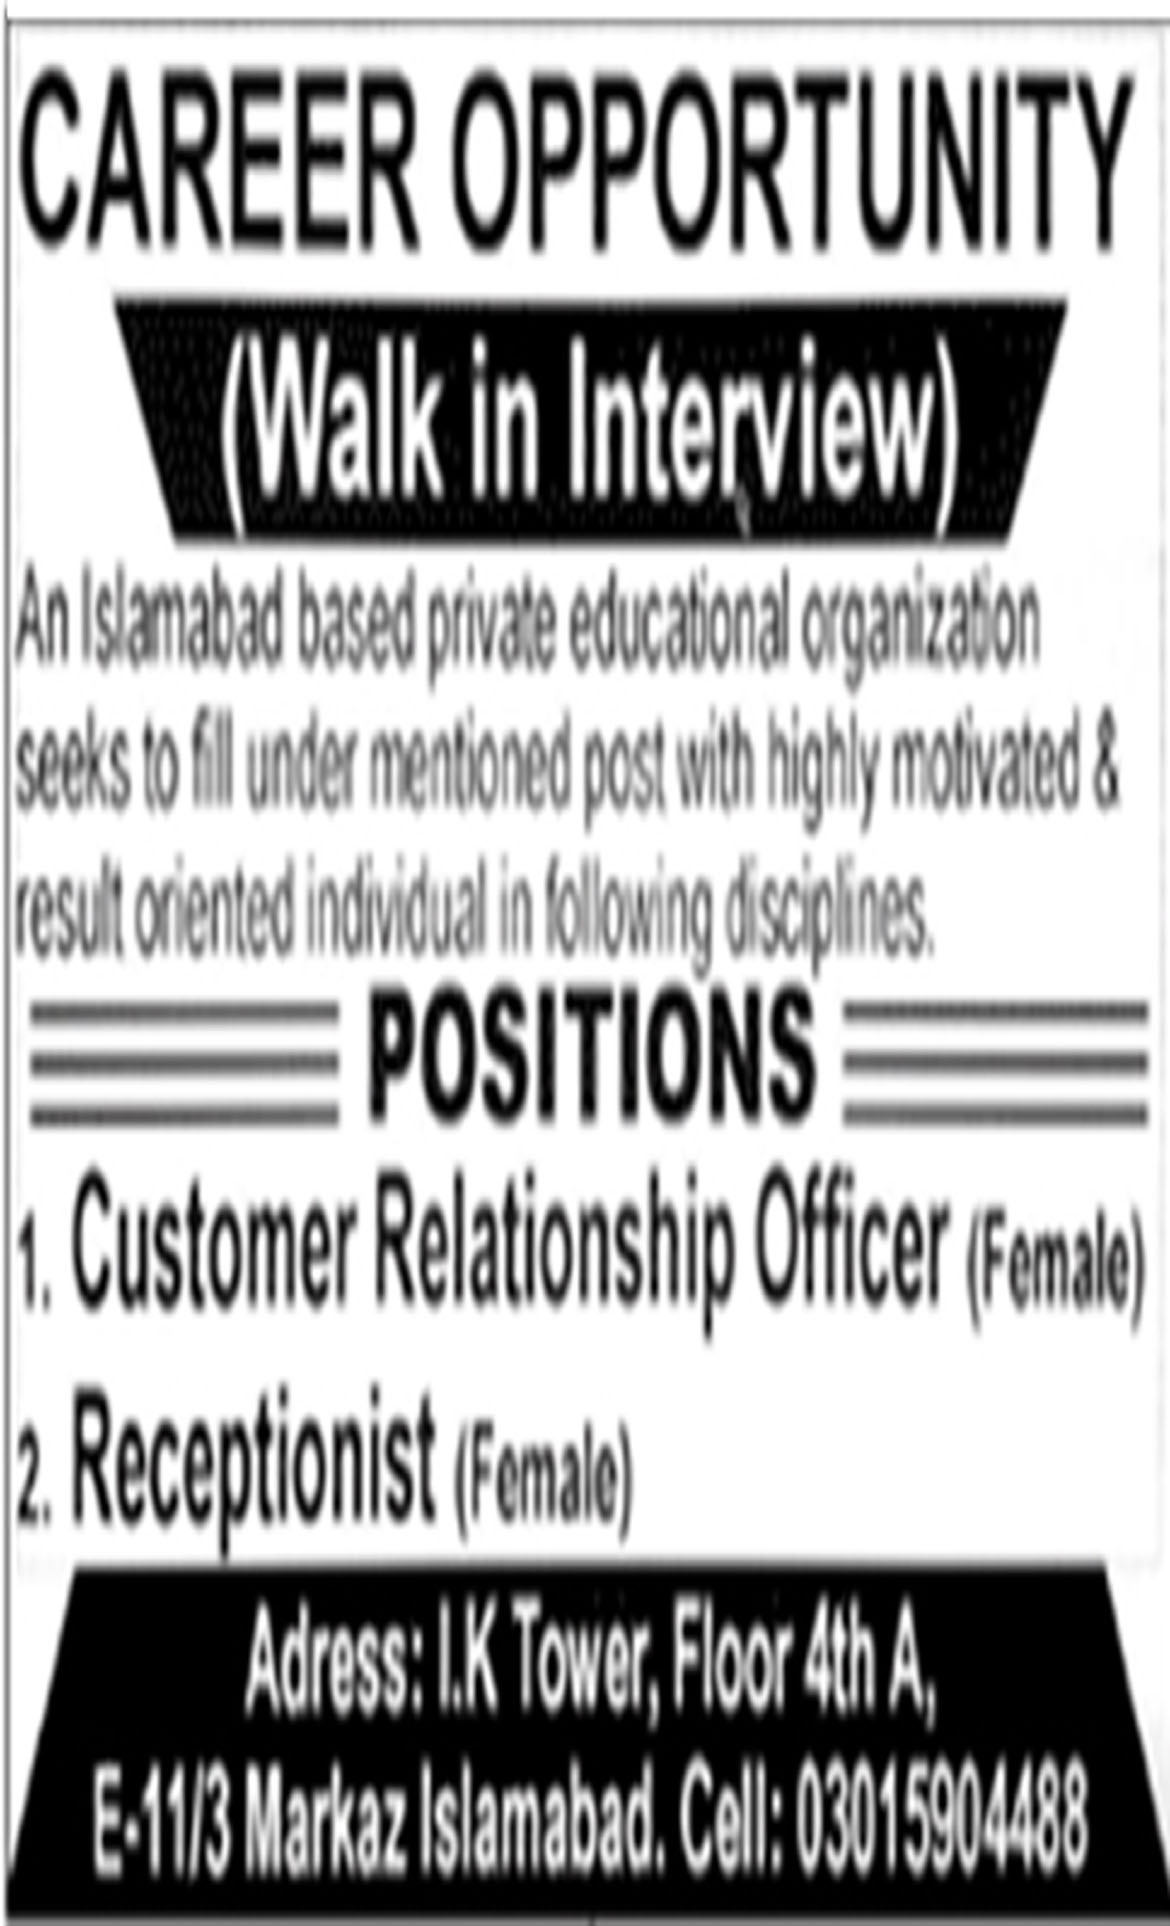 Jobs In Customer Relationship Officer, Receptionist  Islamabad 10 Oct 2018